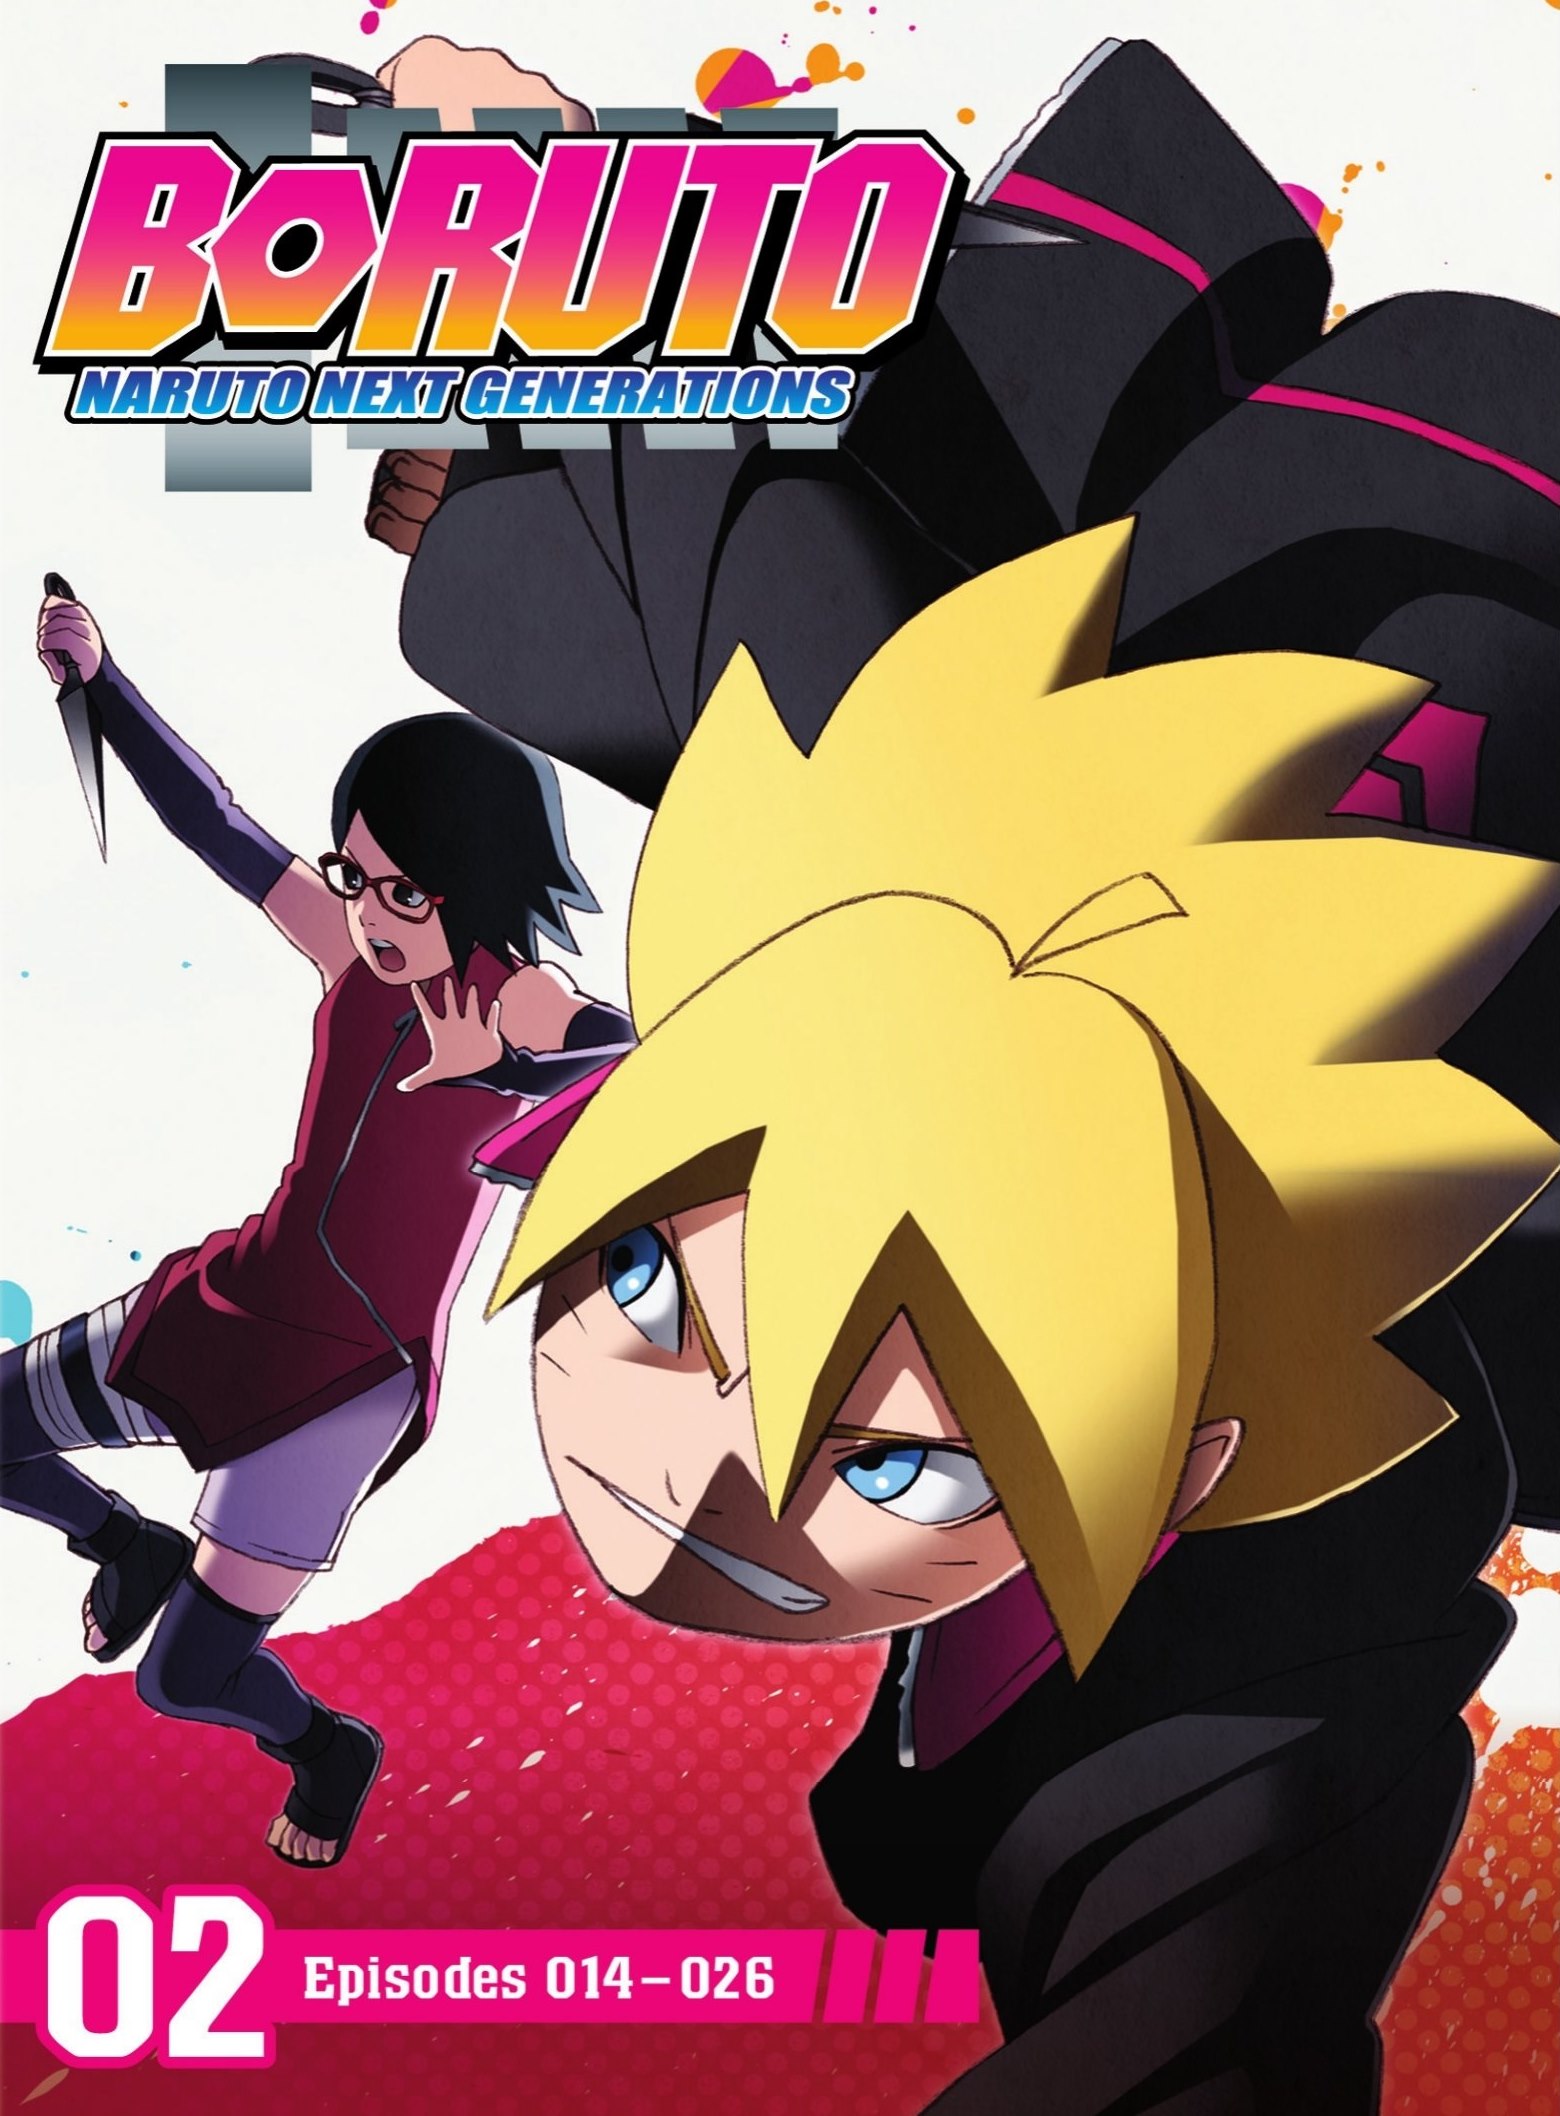 Boruto Naruto Next Generations Set 8 Blu-ray